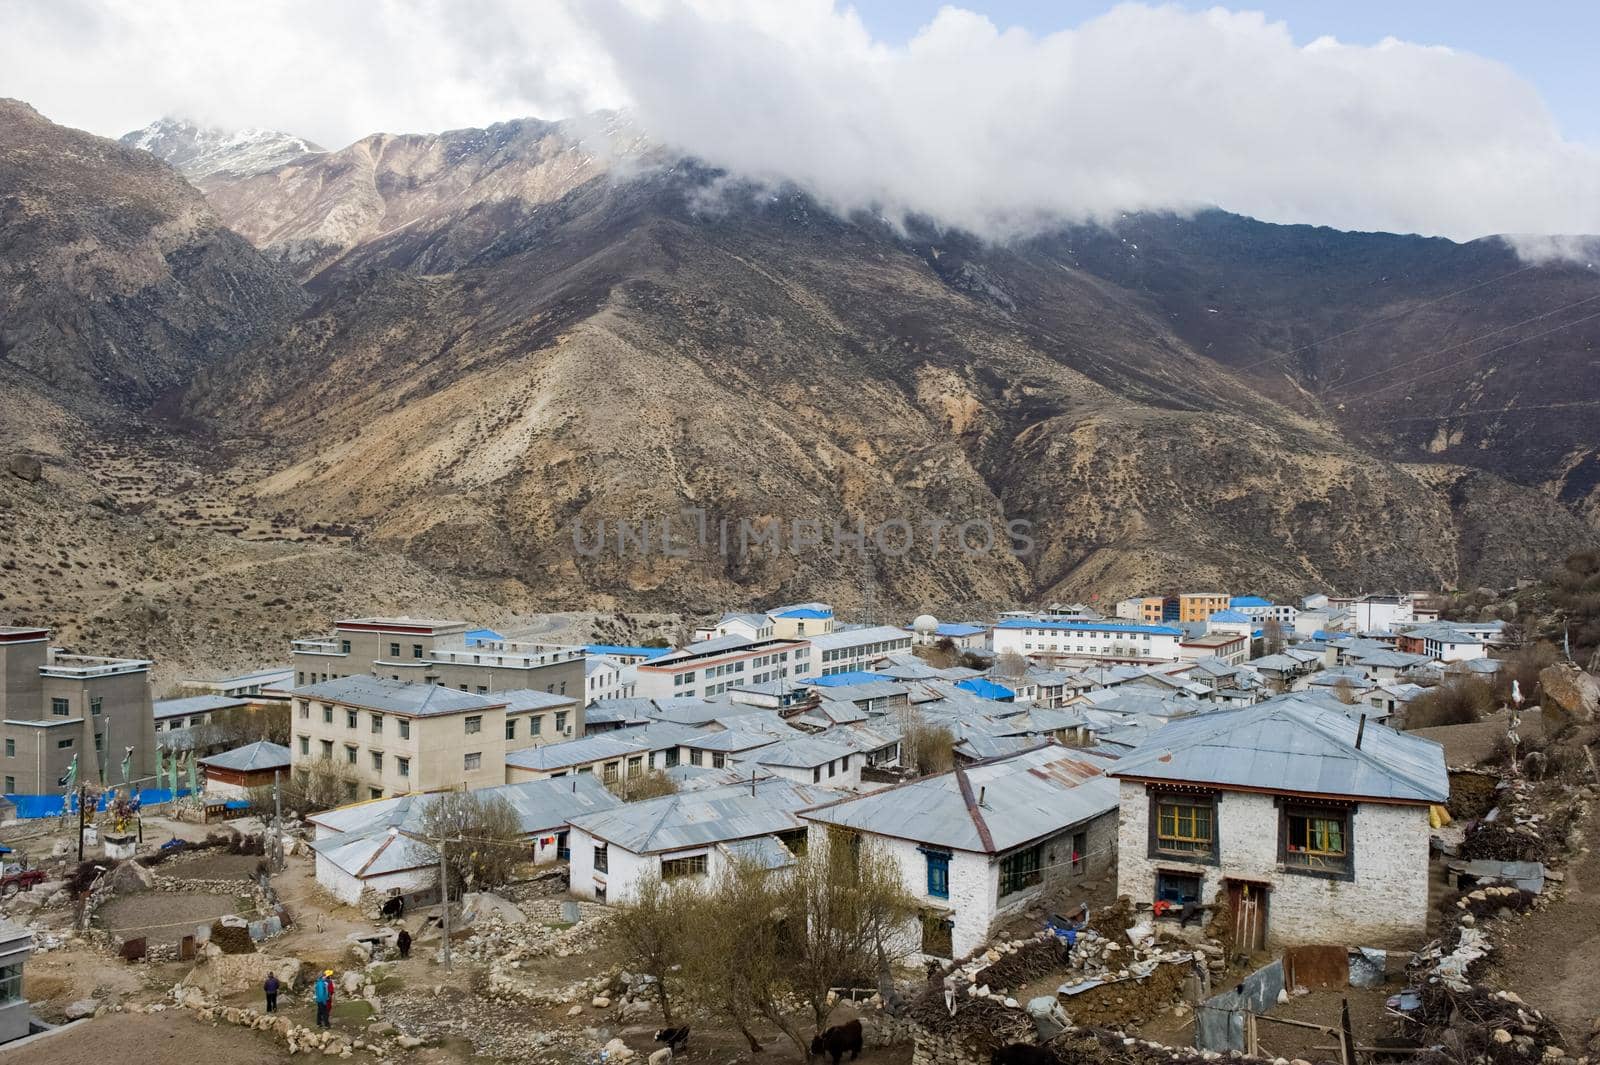 A village in Tibet, a mountain village.